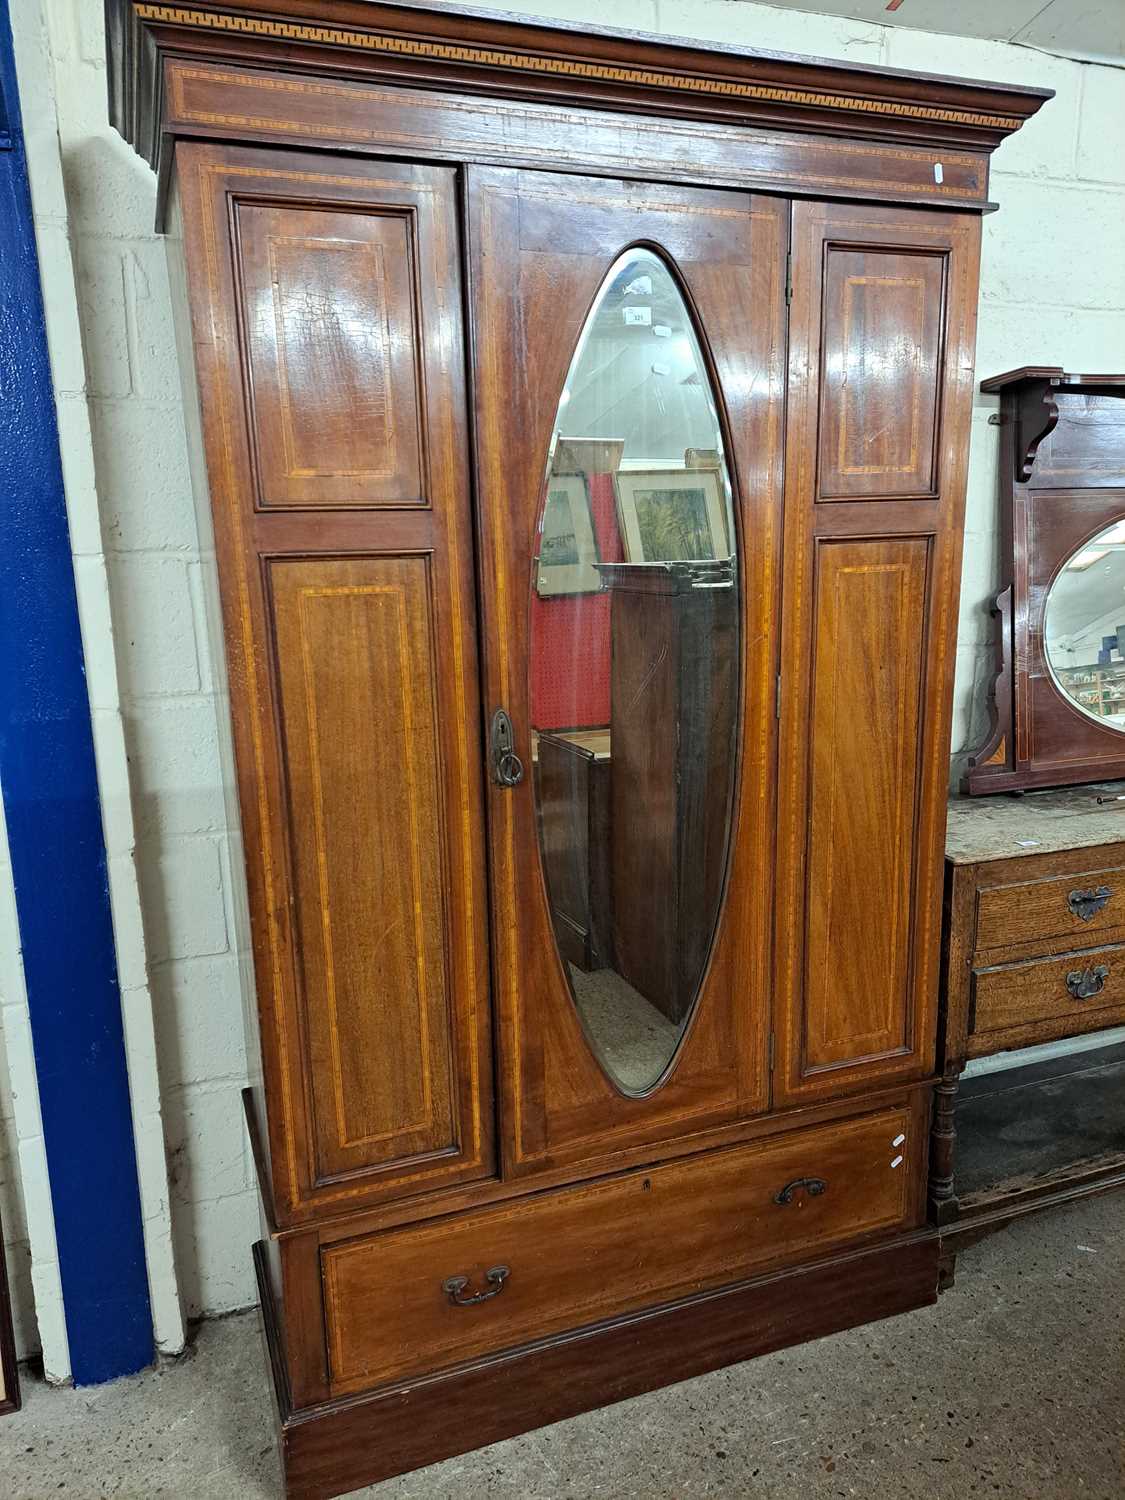 Edwardian wardrobe with oval mirrored door